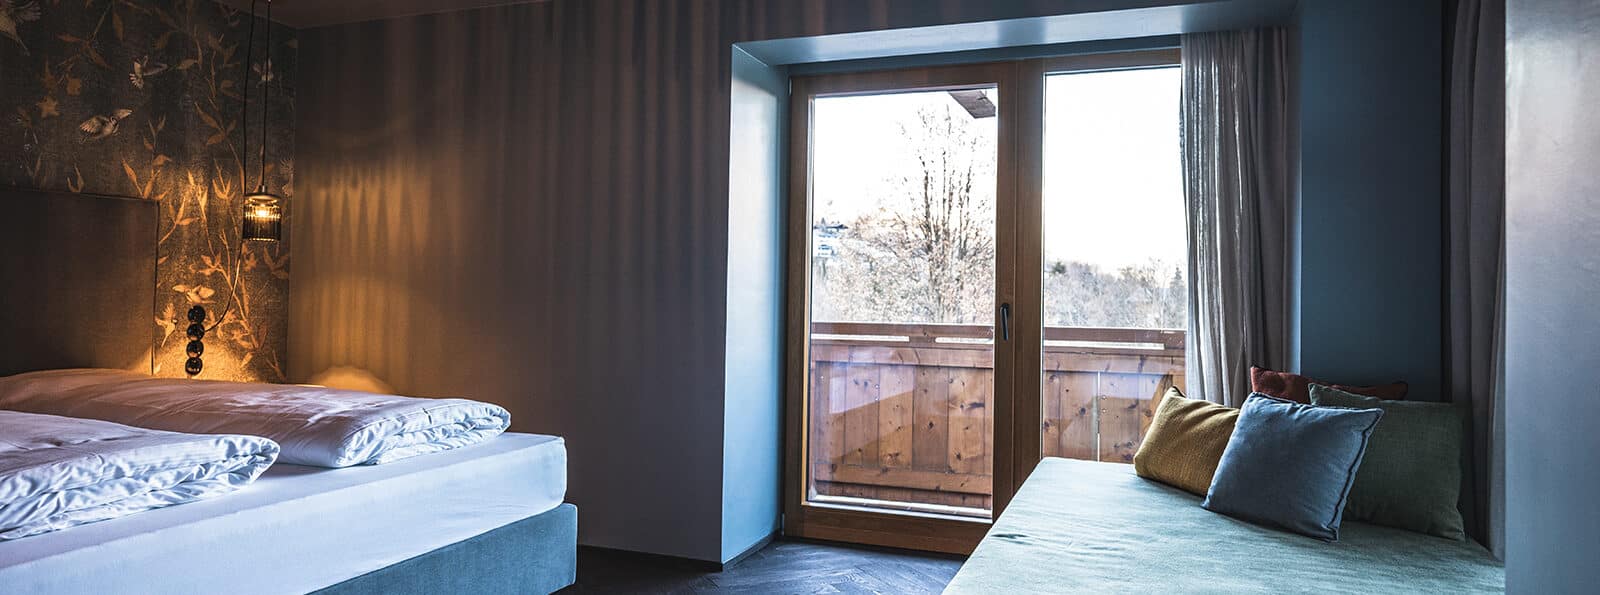 hotel-kaprun-dasfalkenstein-falkenstein-kitzsteinhorn-zellkaprun-zellamseekaprun-wellness-hallenbad-sauna-fitness-suite-studio-doppelzimmer-badewanne-premium-9-